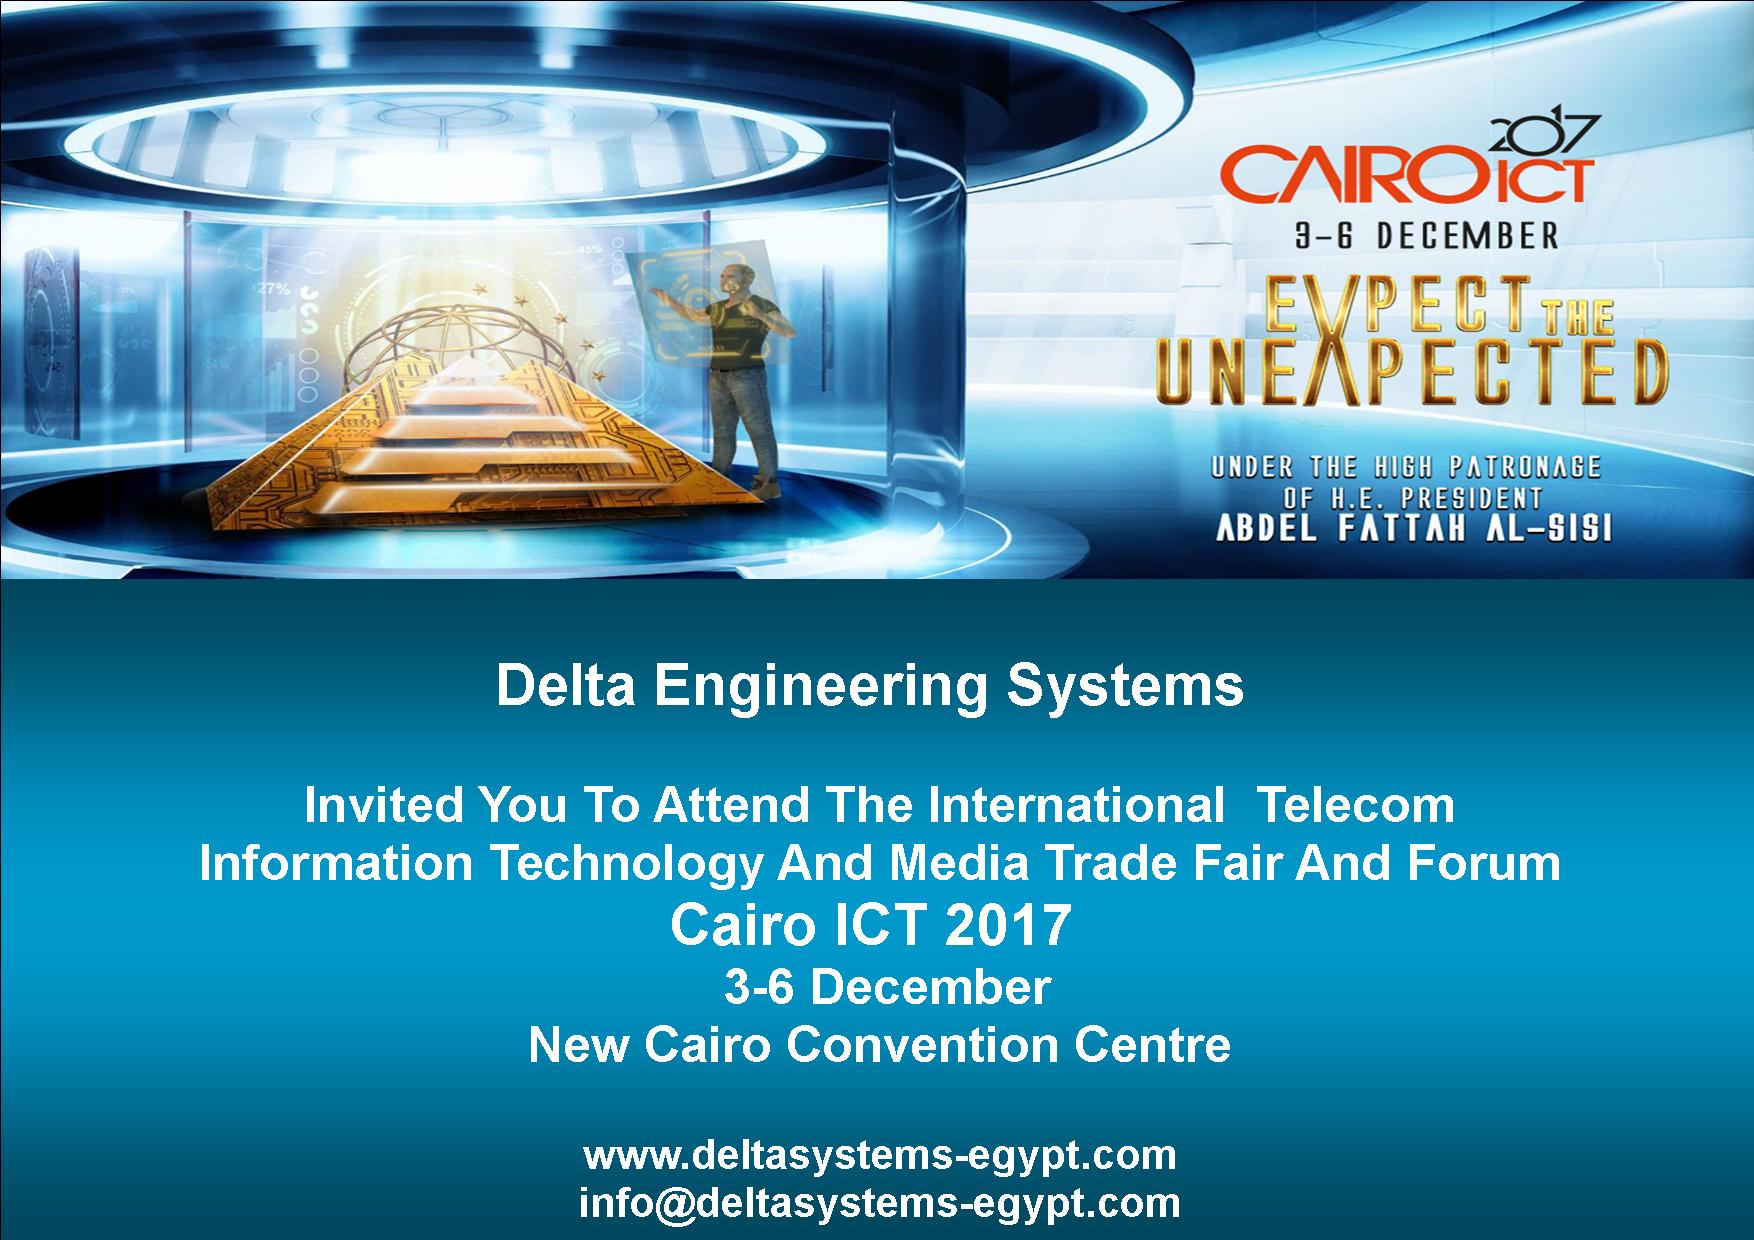 International Telecom Information Technology And  Media  Trade Fair  And  Forum - Cairo ICT 2017